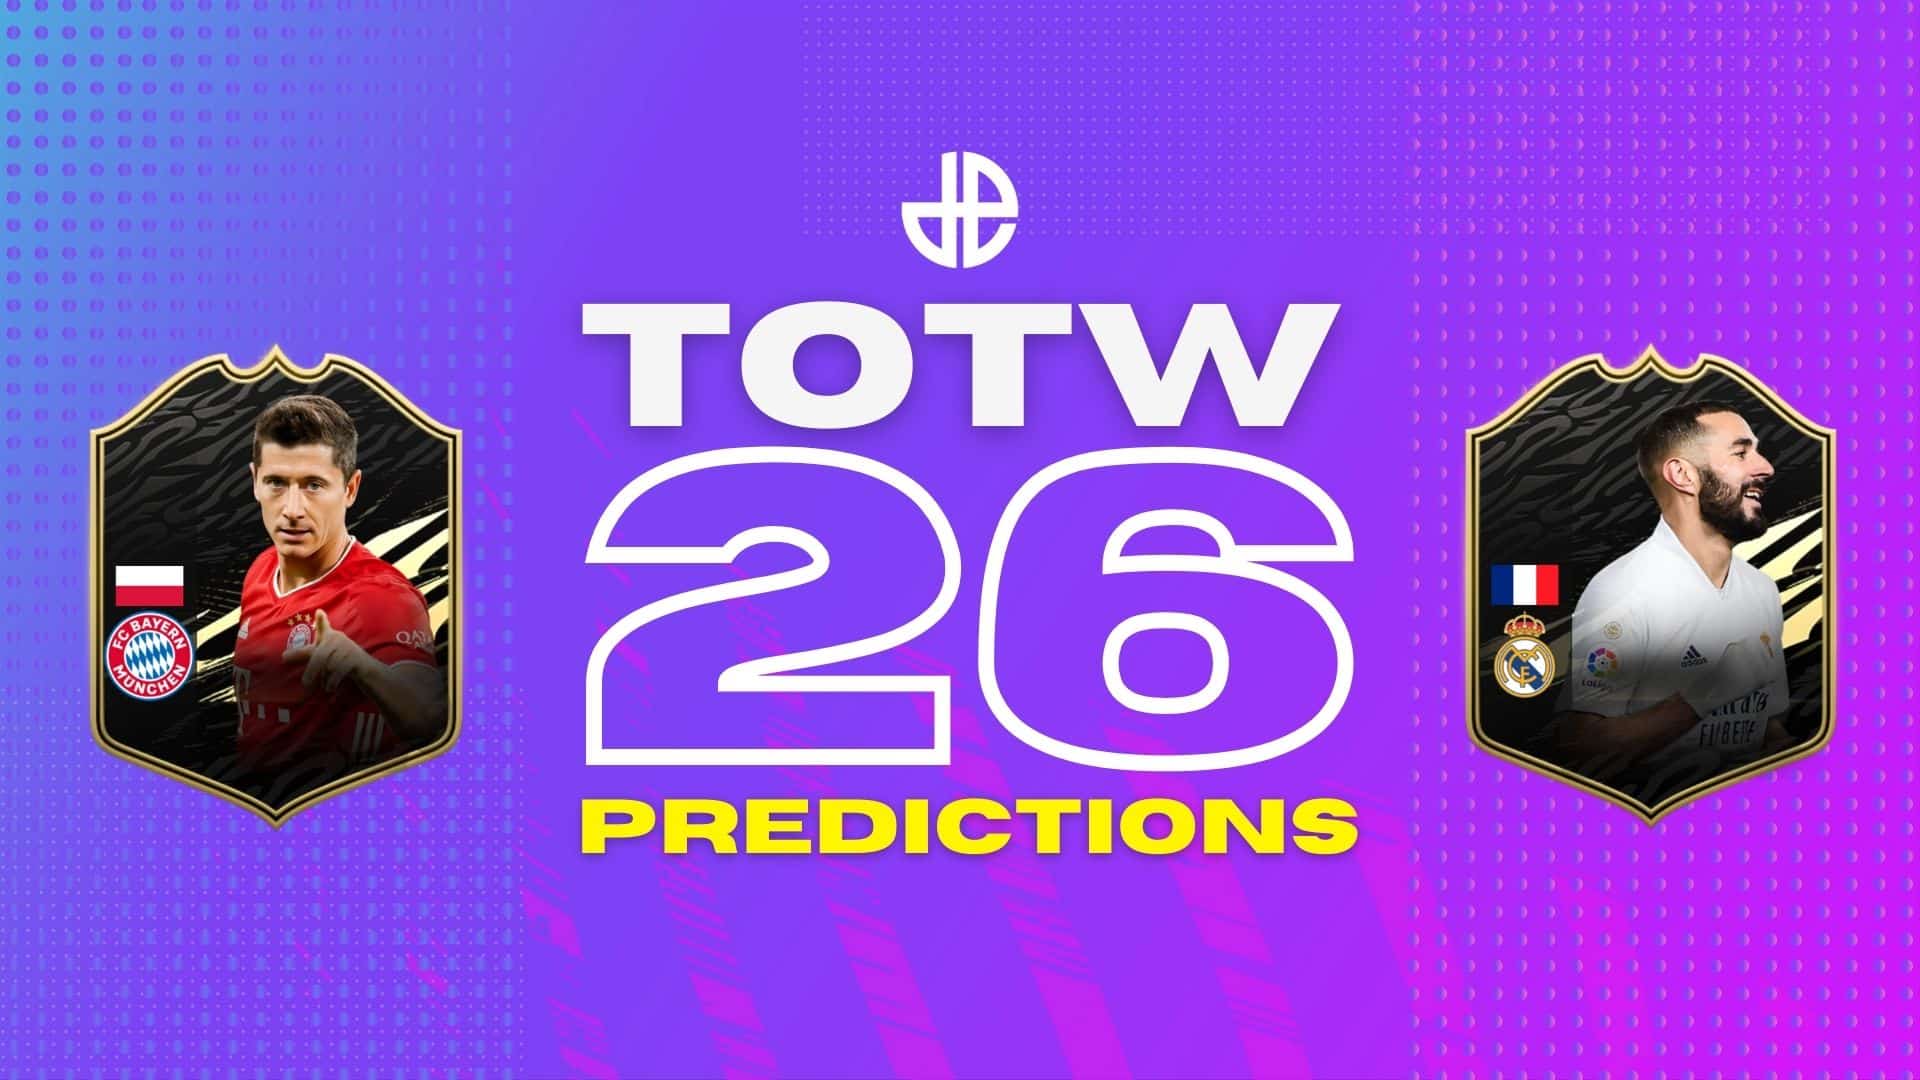 FIFA 21 TOTW 26 predictions with Lewandowski and Benzema cards